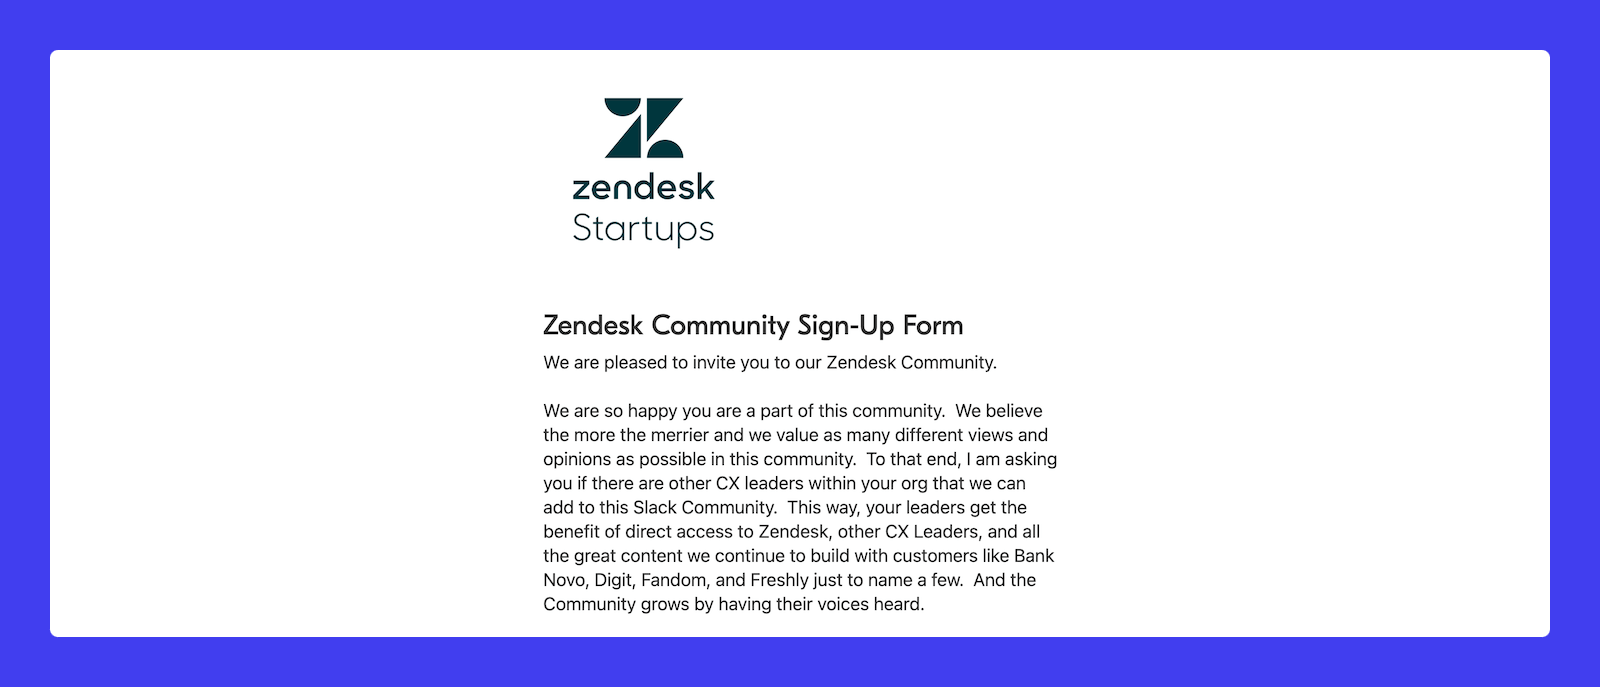 The Zendesk Community.